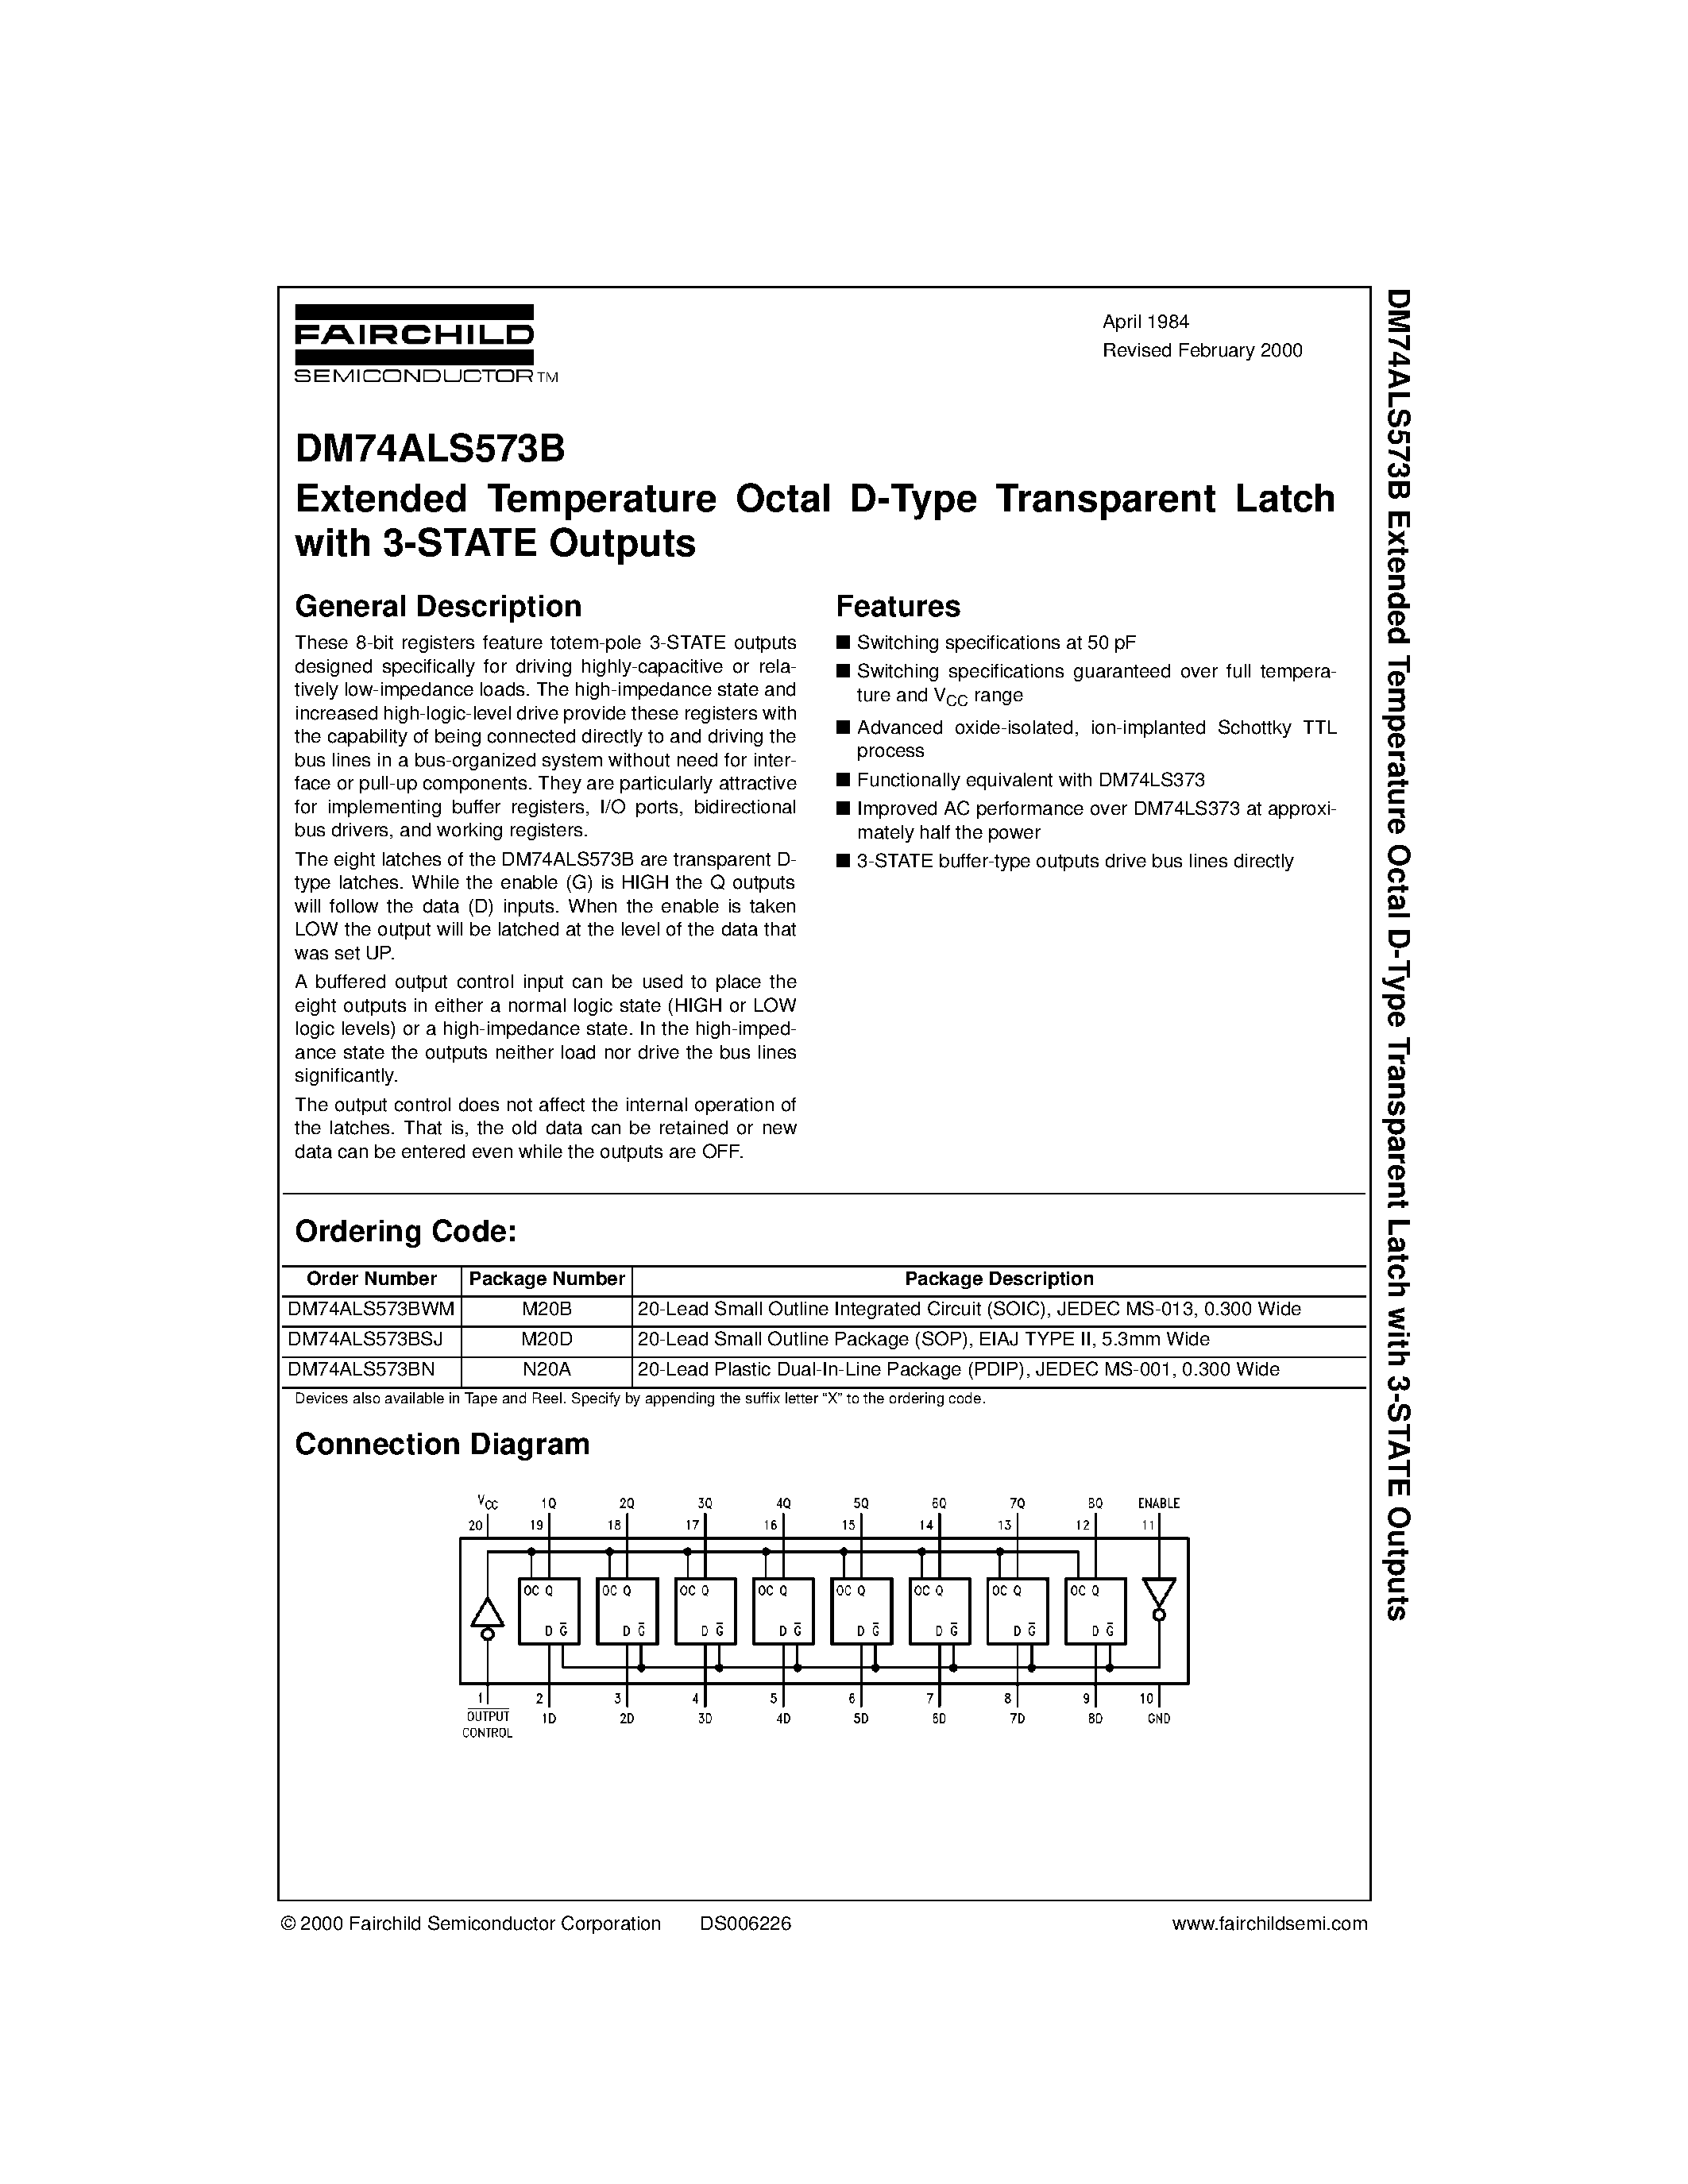 Даташит DM74ALS573BSJ - Extended Temperature Octal D-Type Transparent Latch страница 1